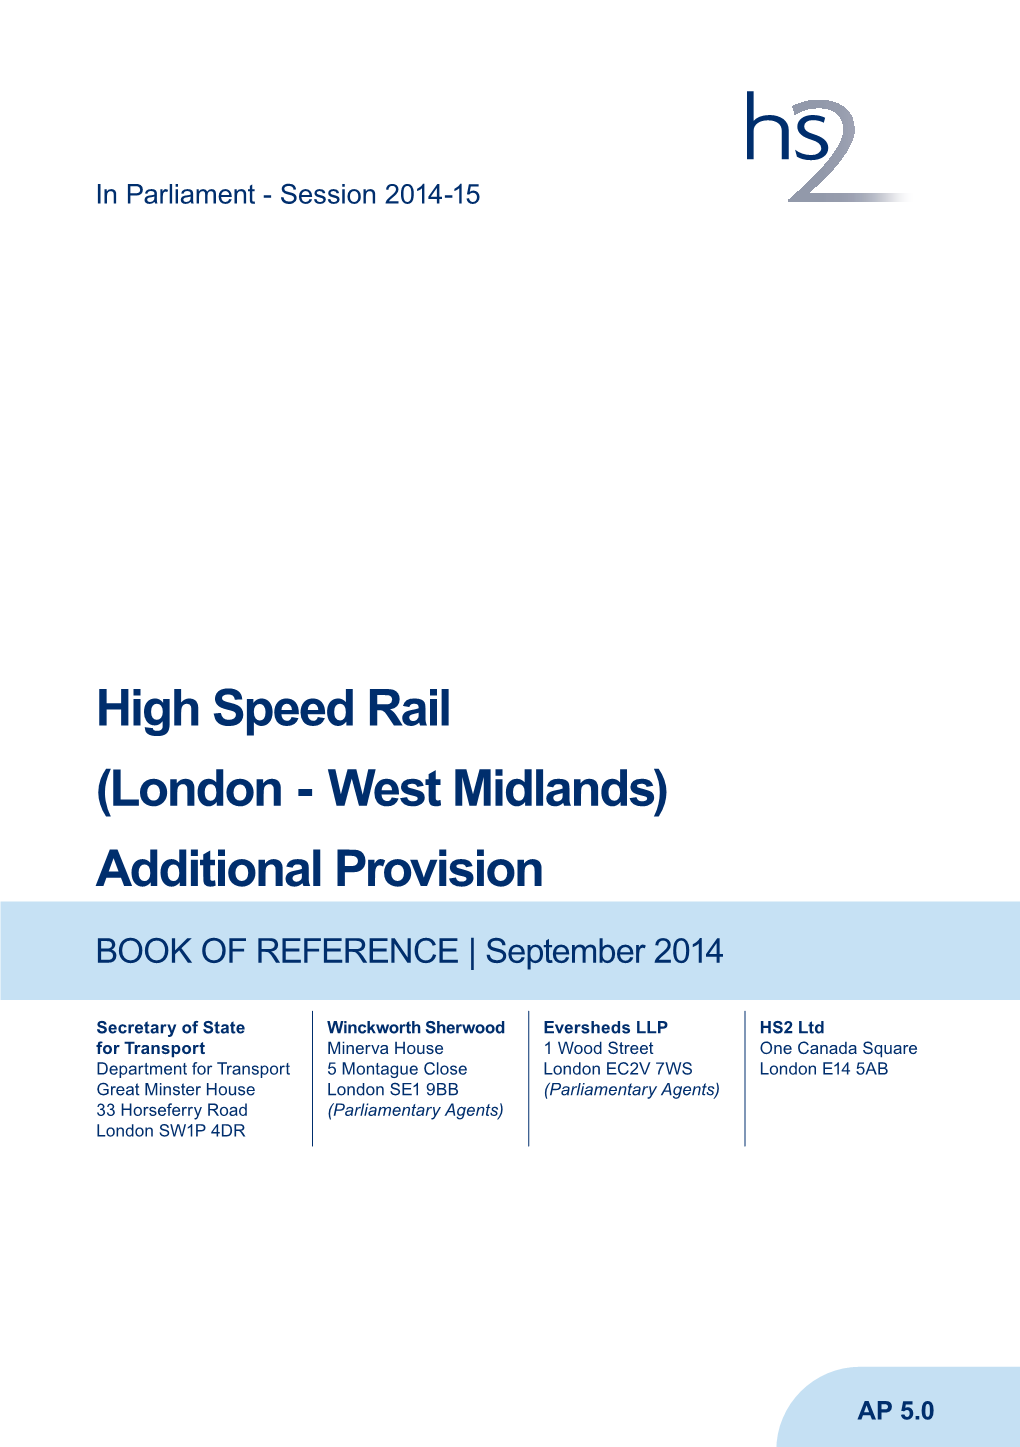 High Speed Rail (London Speed High West - Midlands) Provision Additional